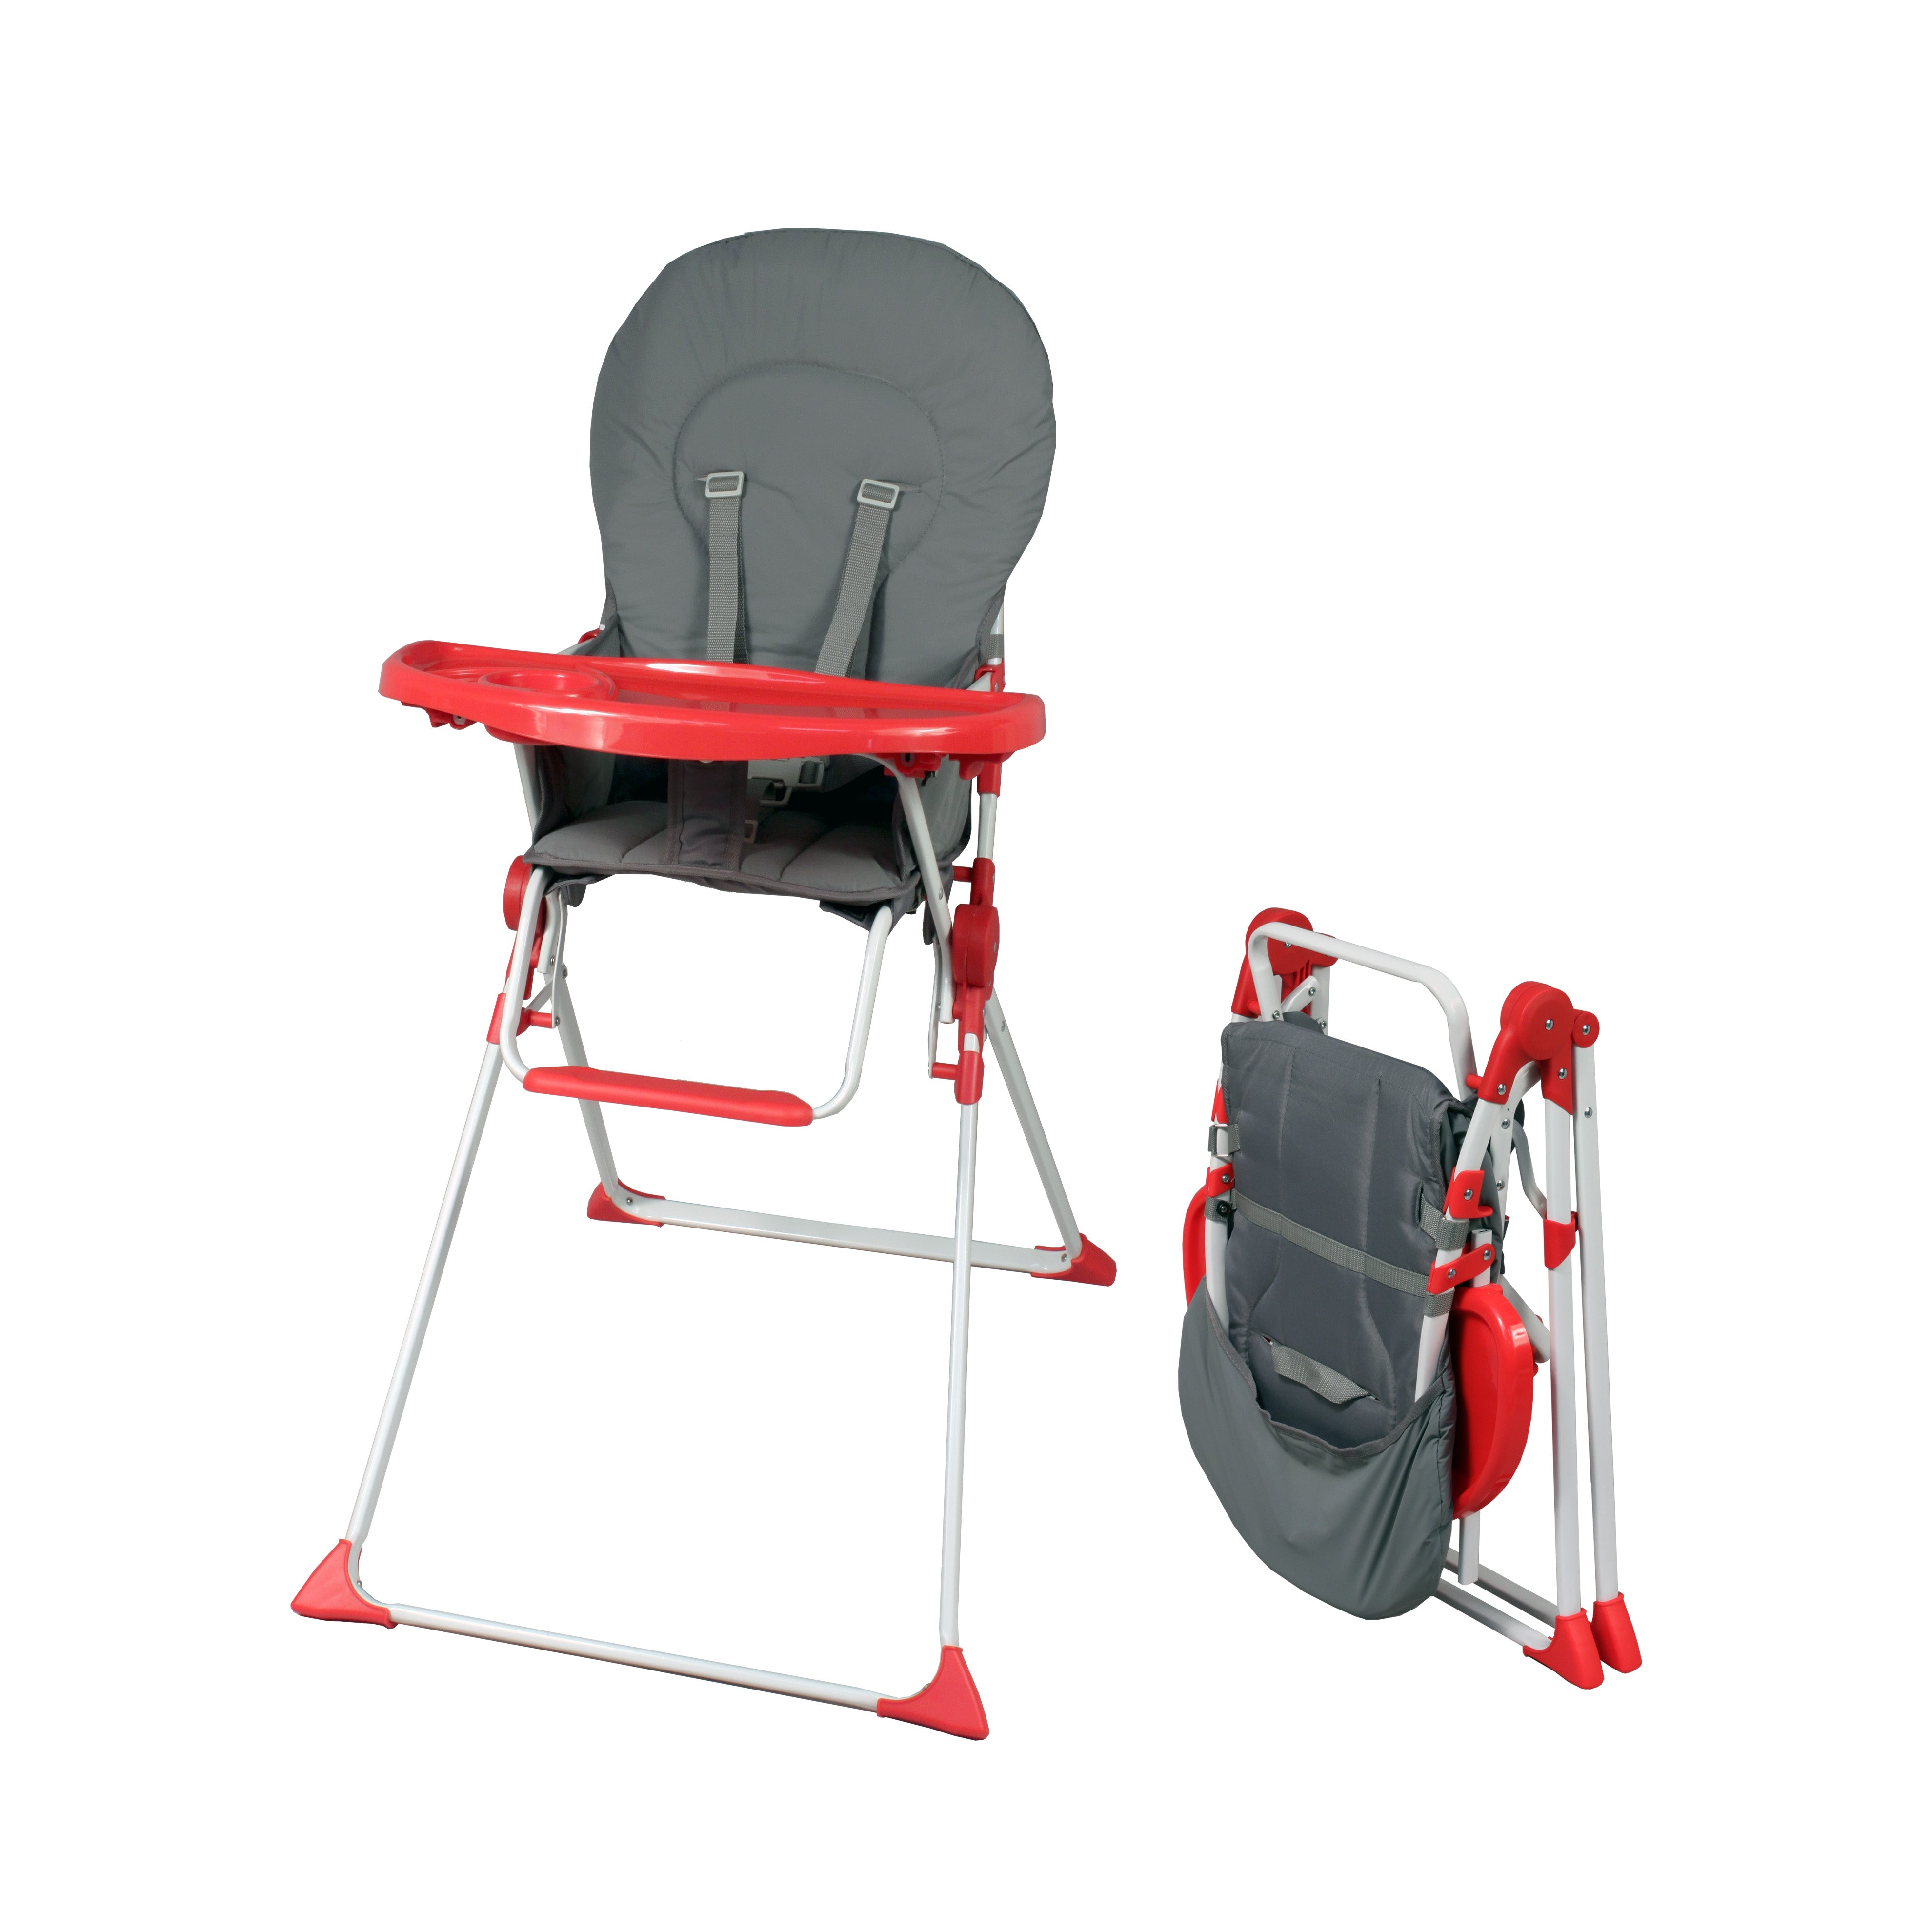 Chaise haute fixe bébé ultra compacte Bambisol – Bambisol Puériculture